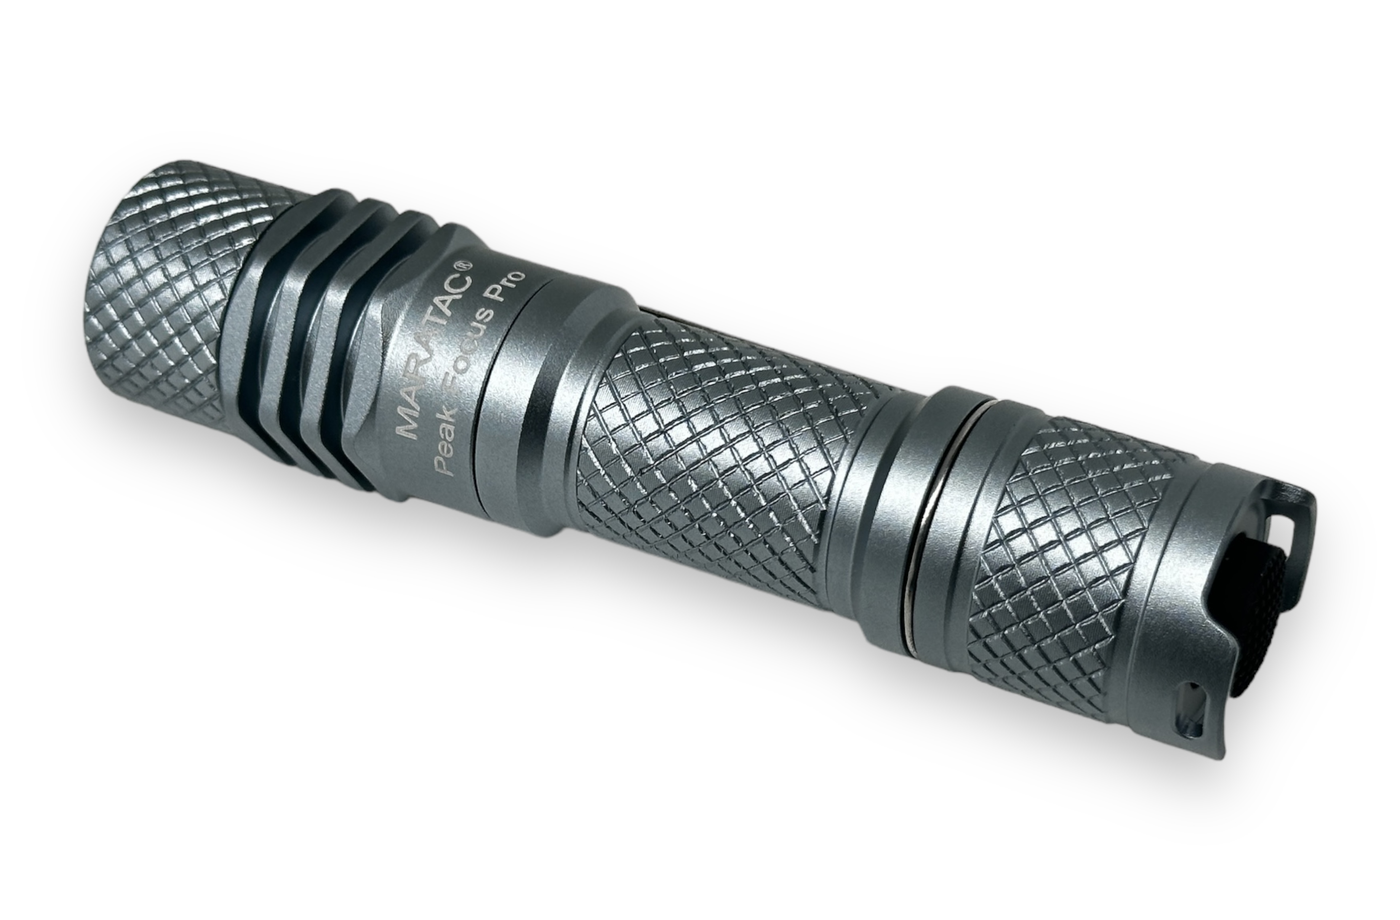 Peak Focus Pro AA / 14500 Flashlight By Maratac®